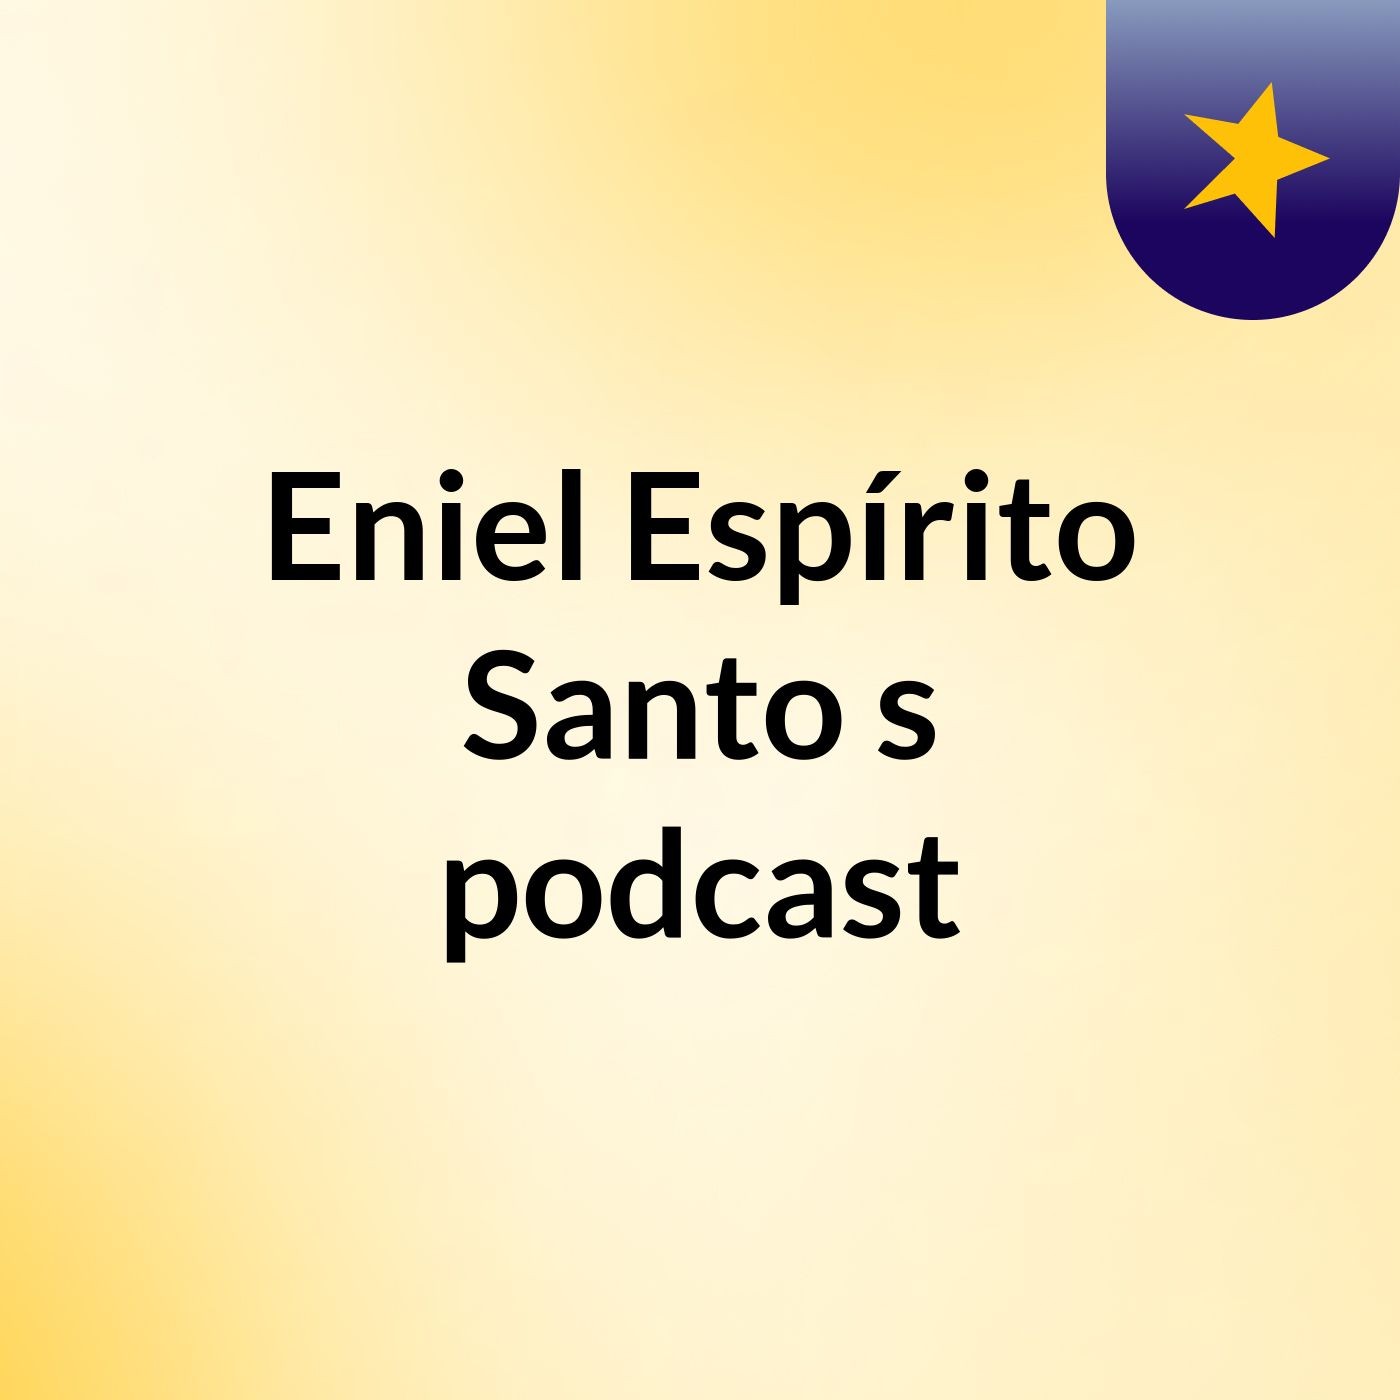 Eniel Espírito Santo's podcast